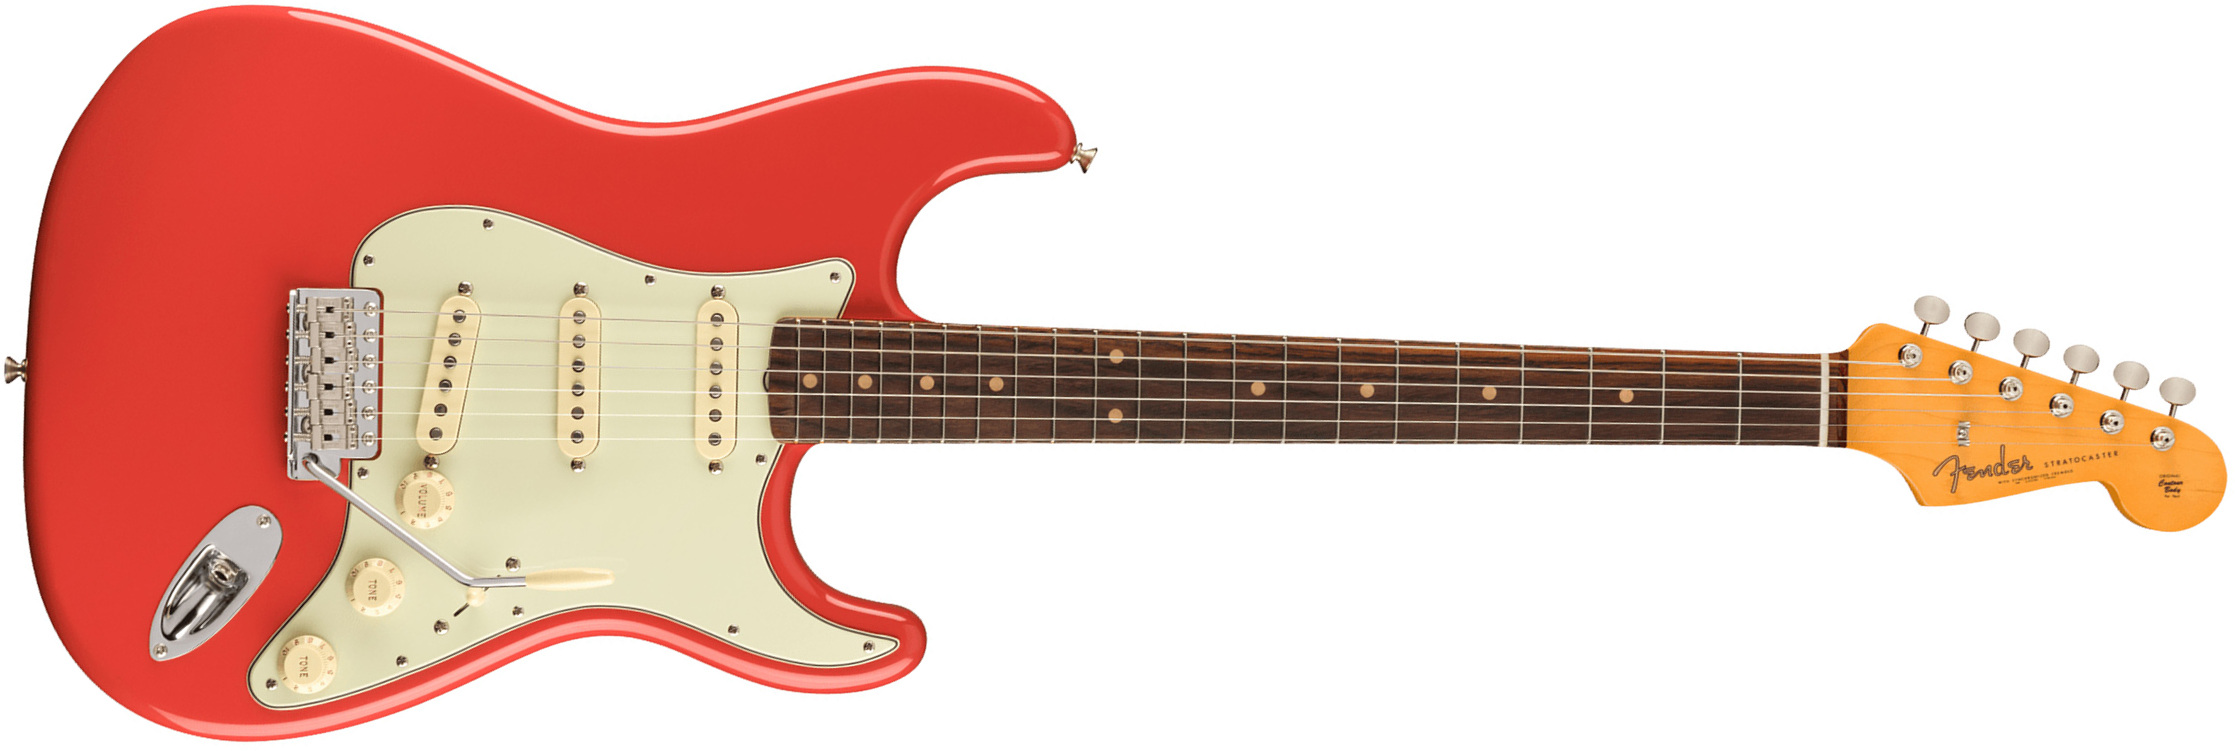 Fender Strat 1961 American Vintage Ii Usa 3s Trem Rw - Fiesta Red - Str shape electric guitar - Main picture